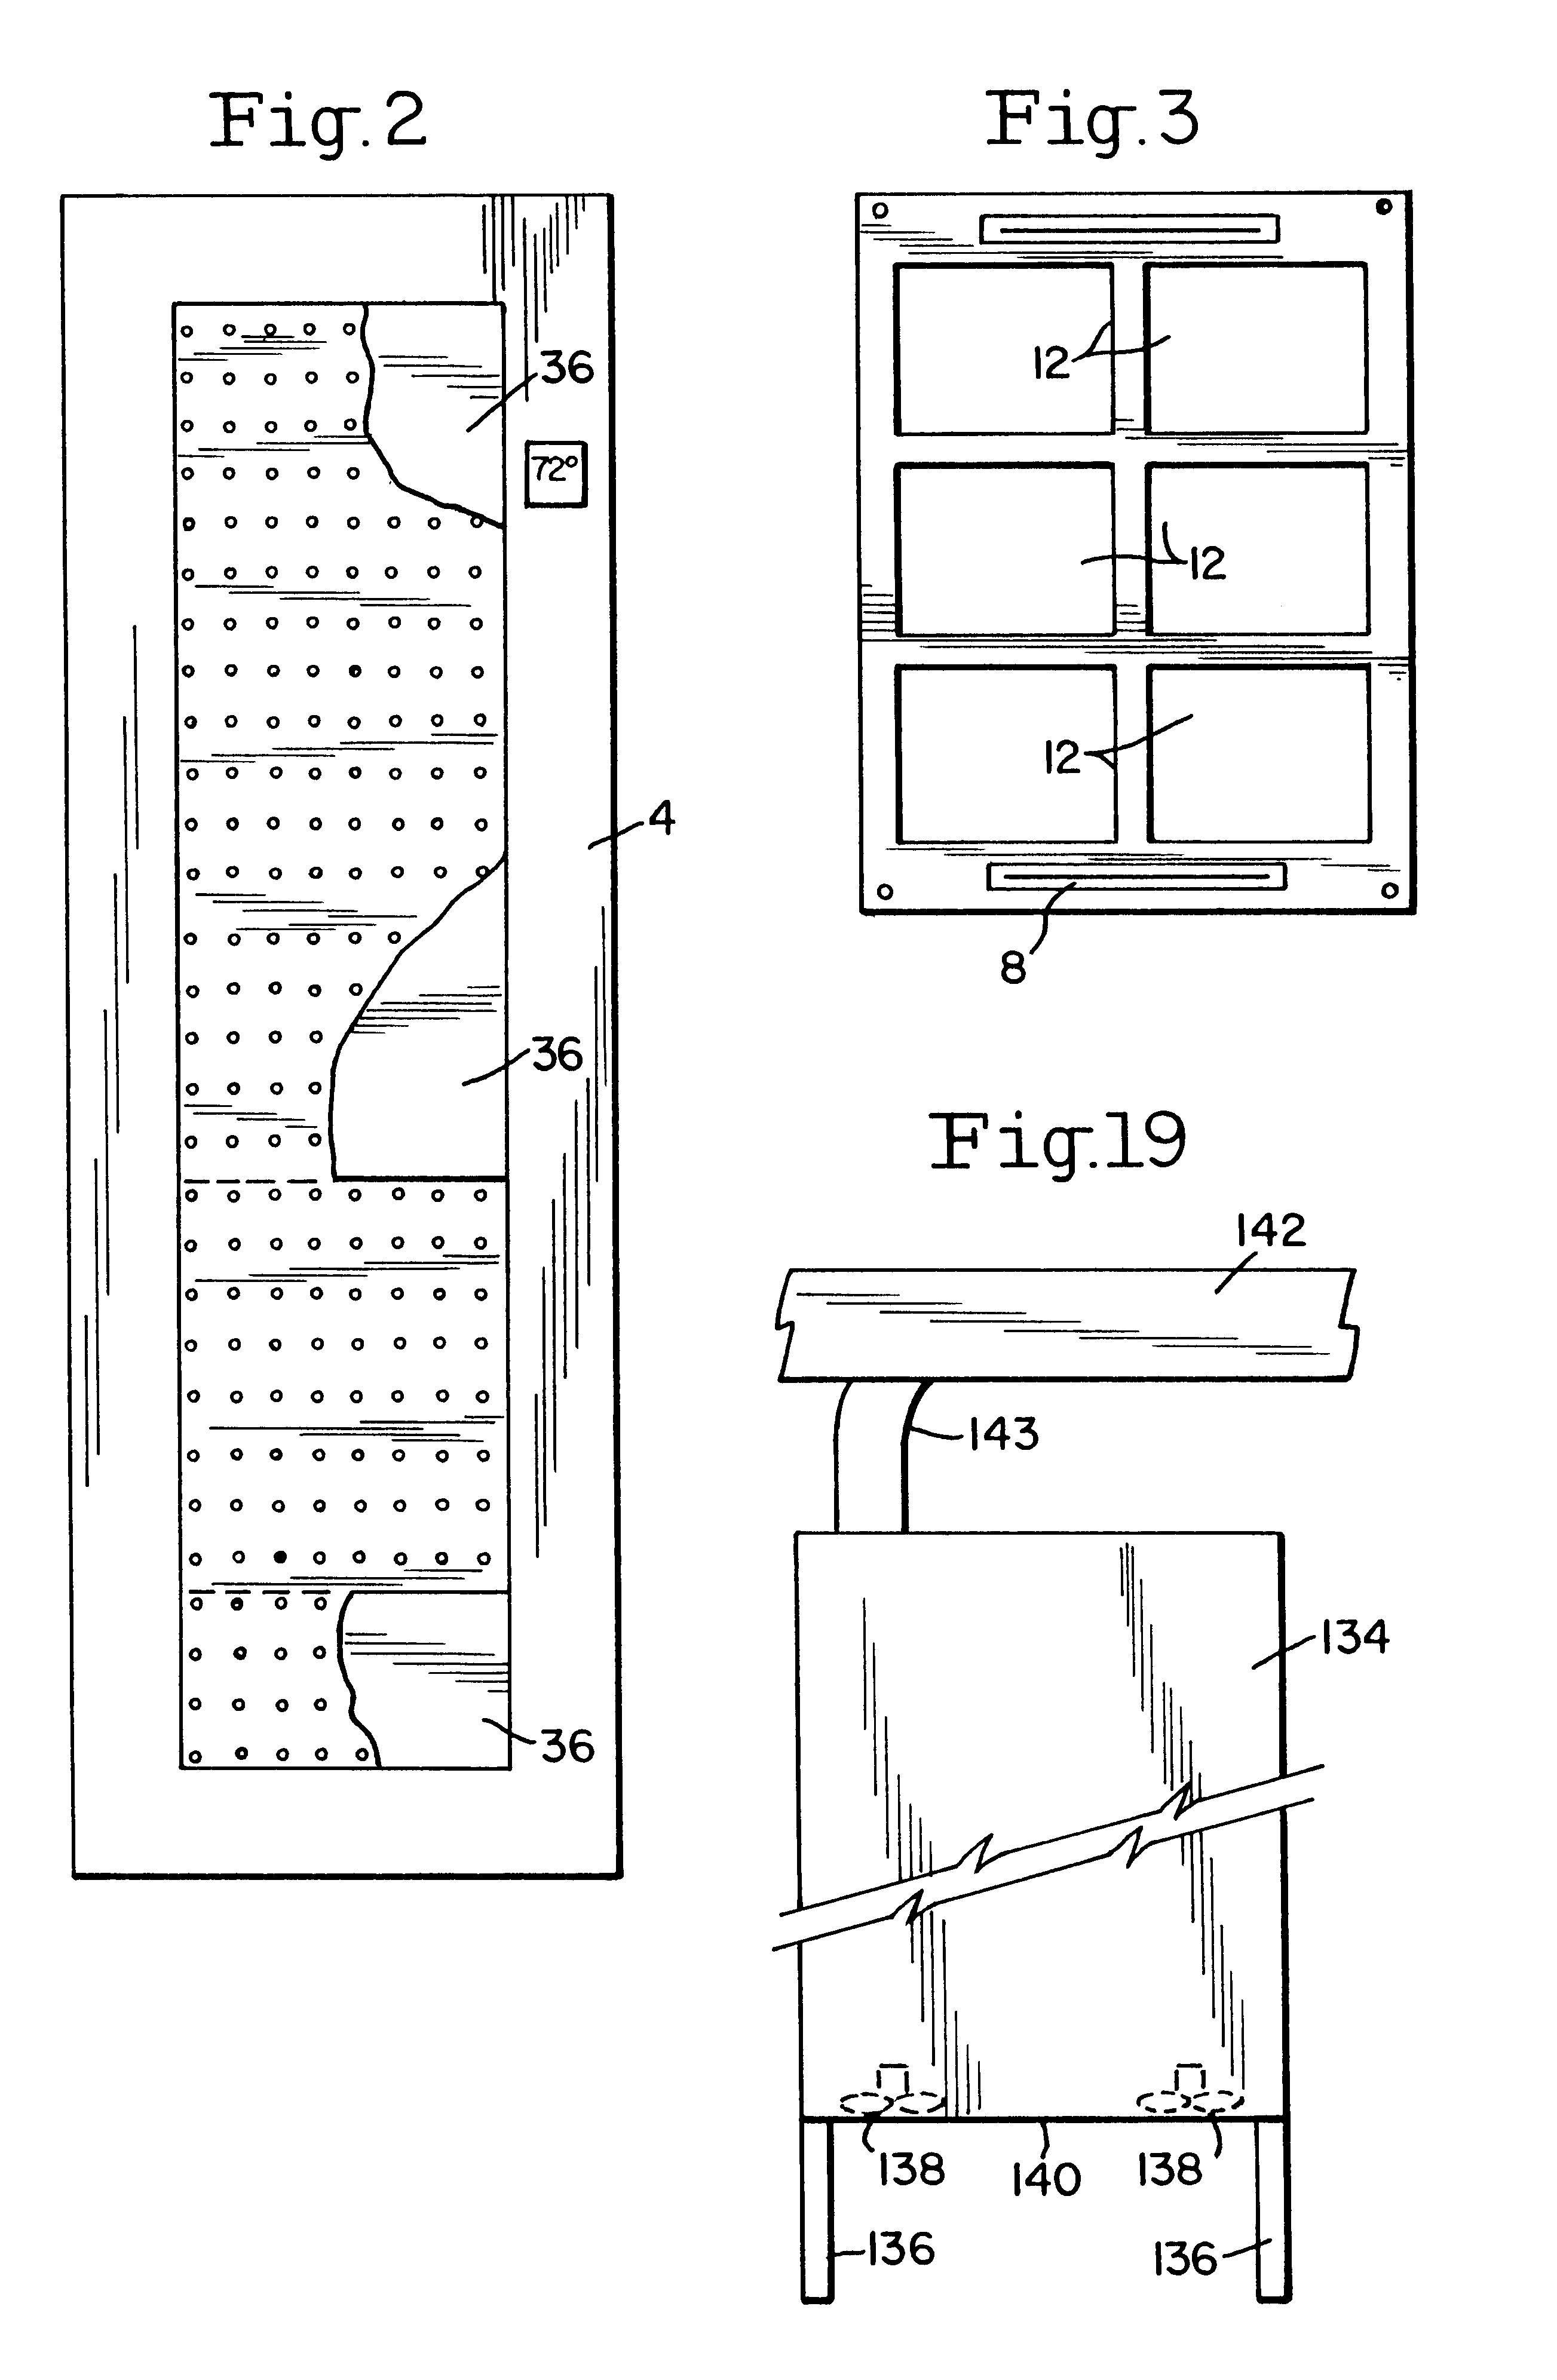 Computer cabinet design